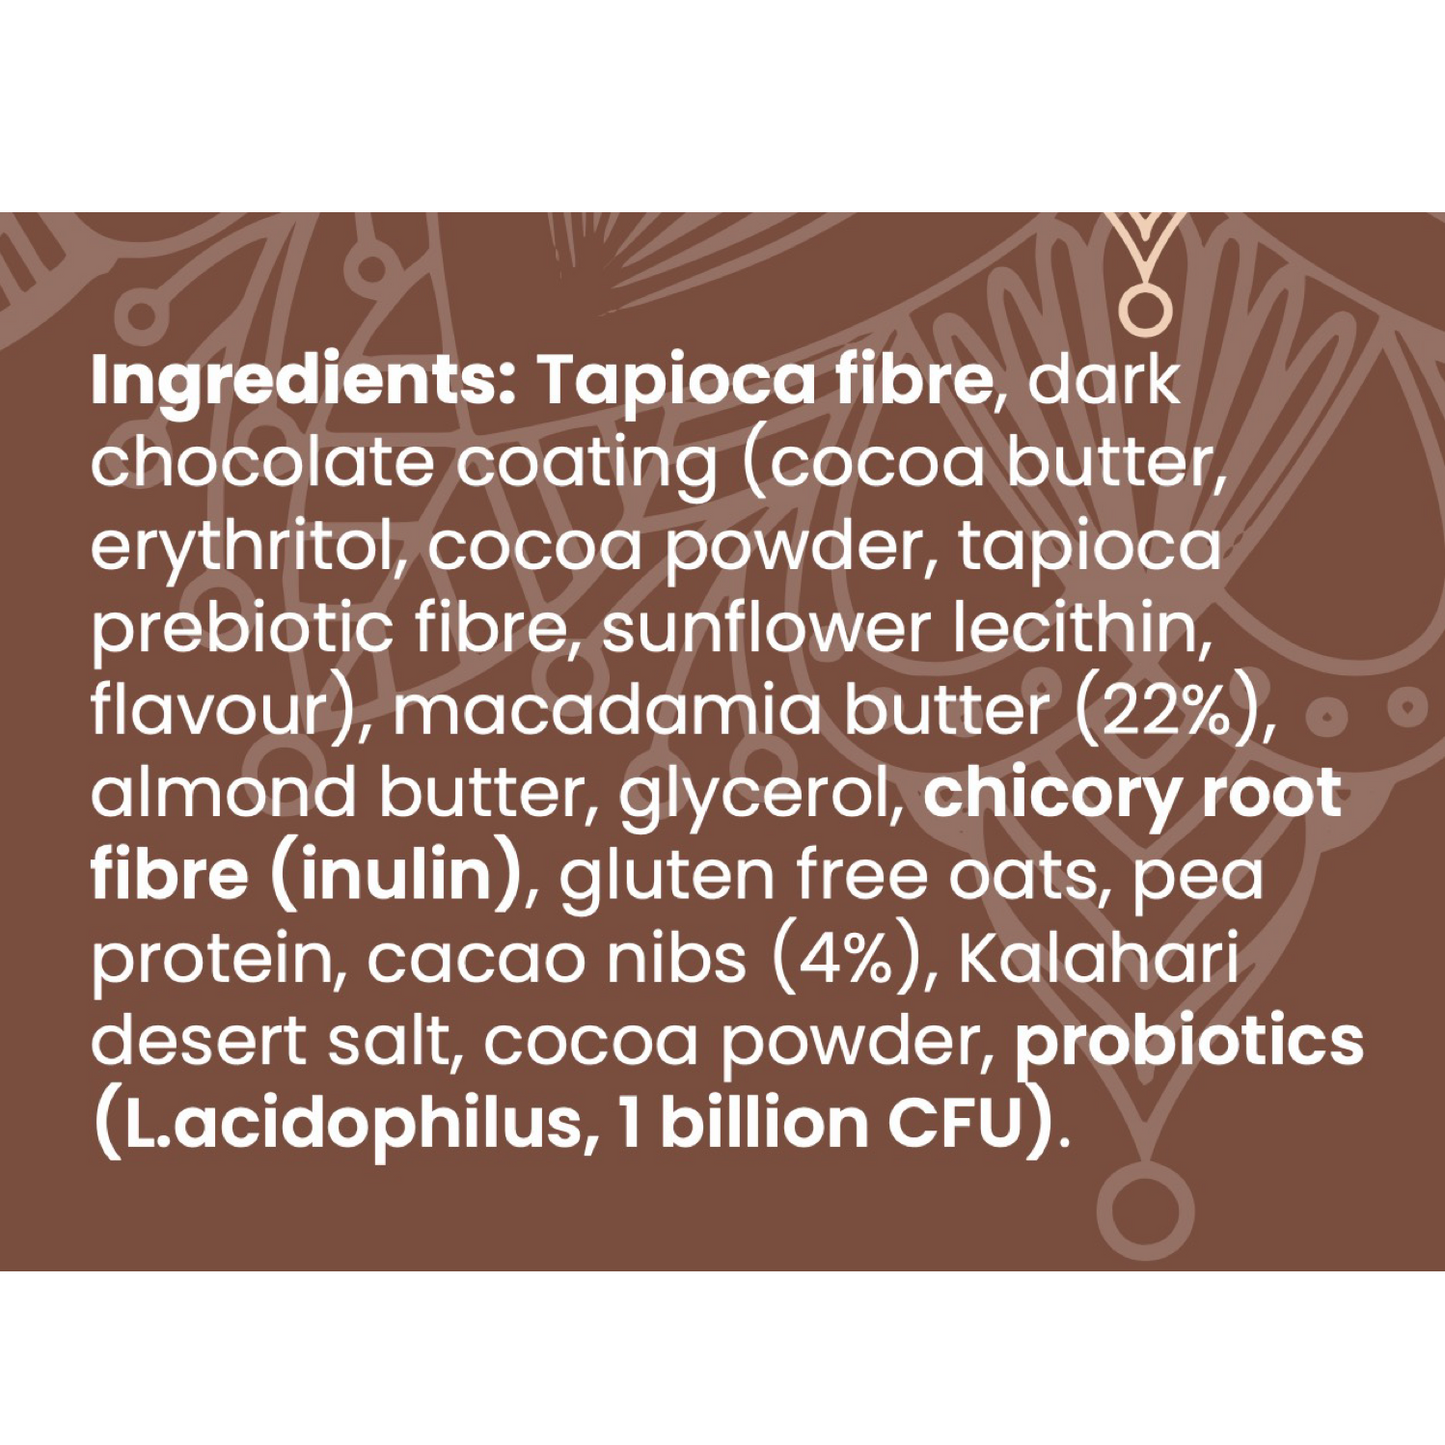 Biome Bar - Cacao & Macadamia